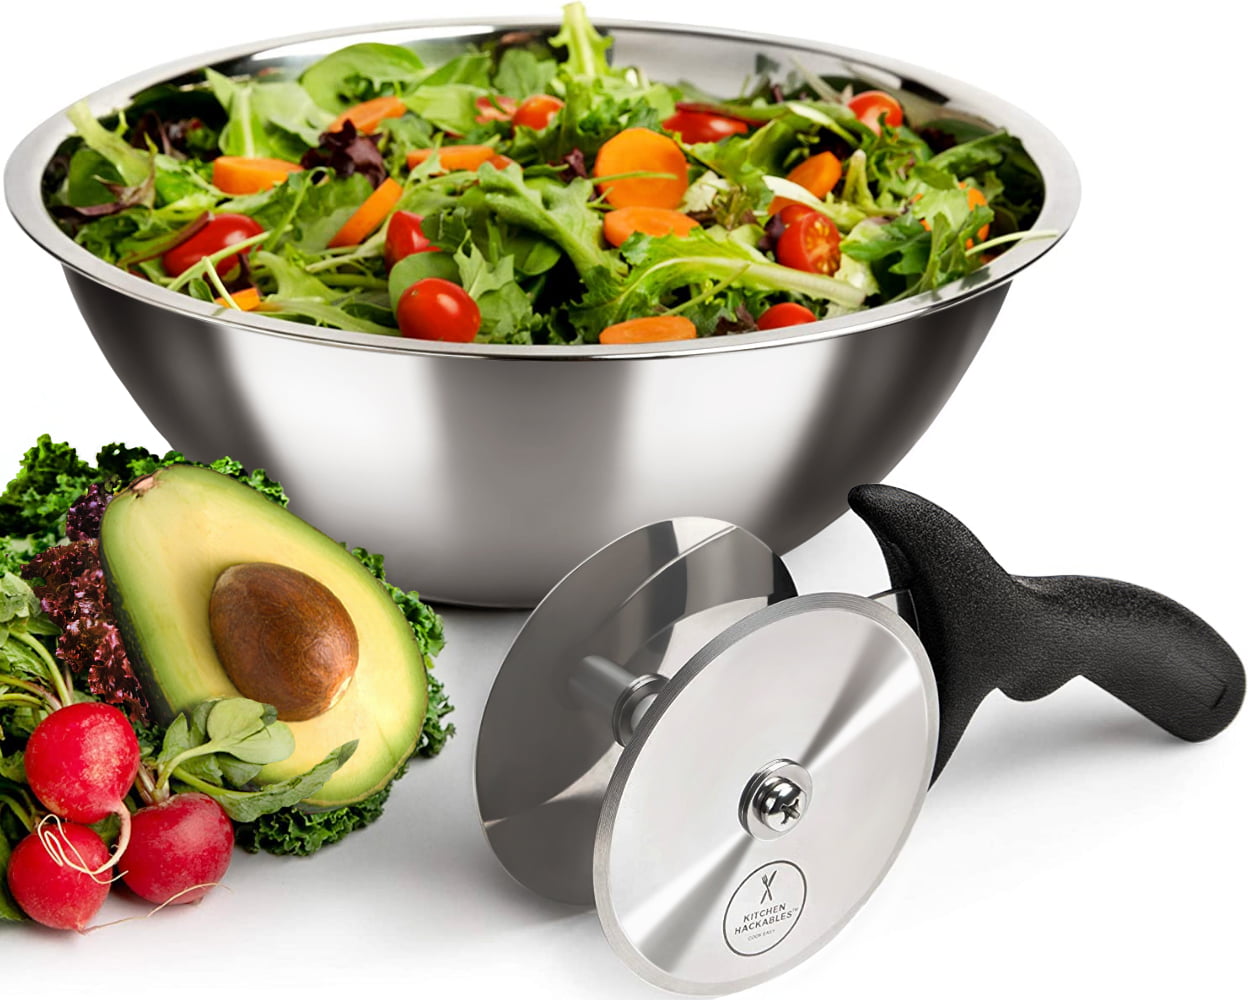 Salad Cutter Bowl - China Salad Cutter Bowl and Salad Maker price